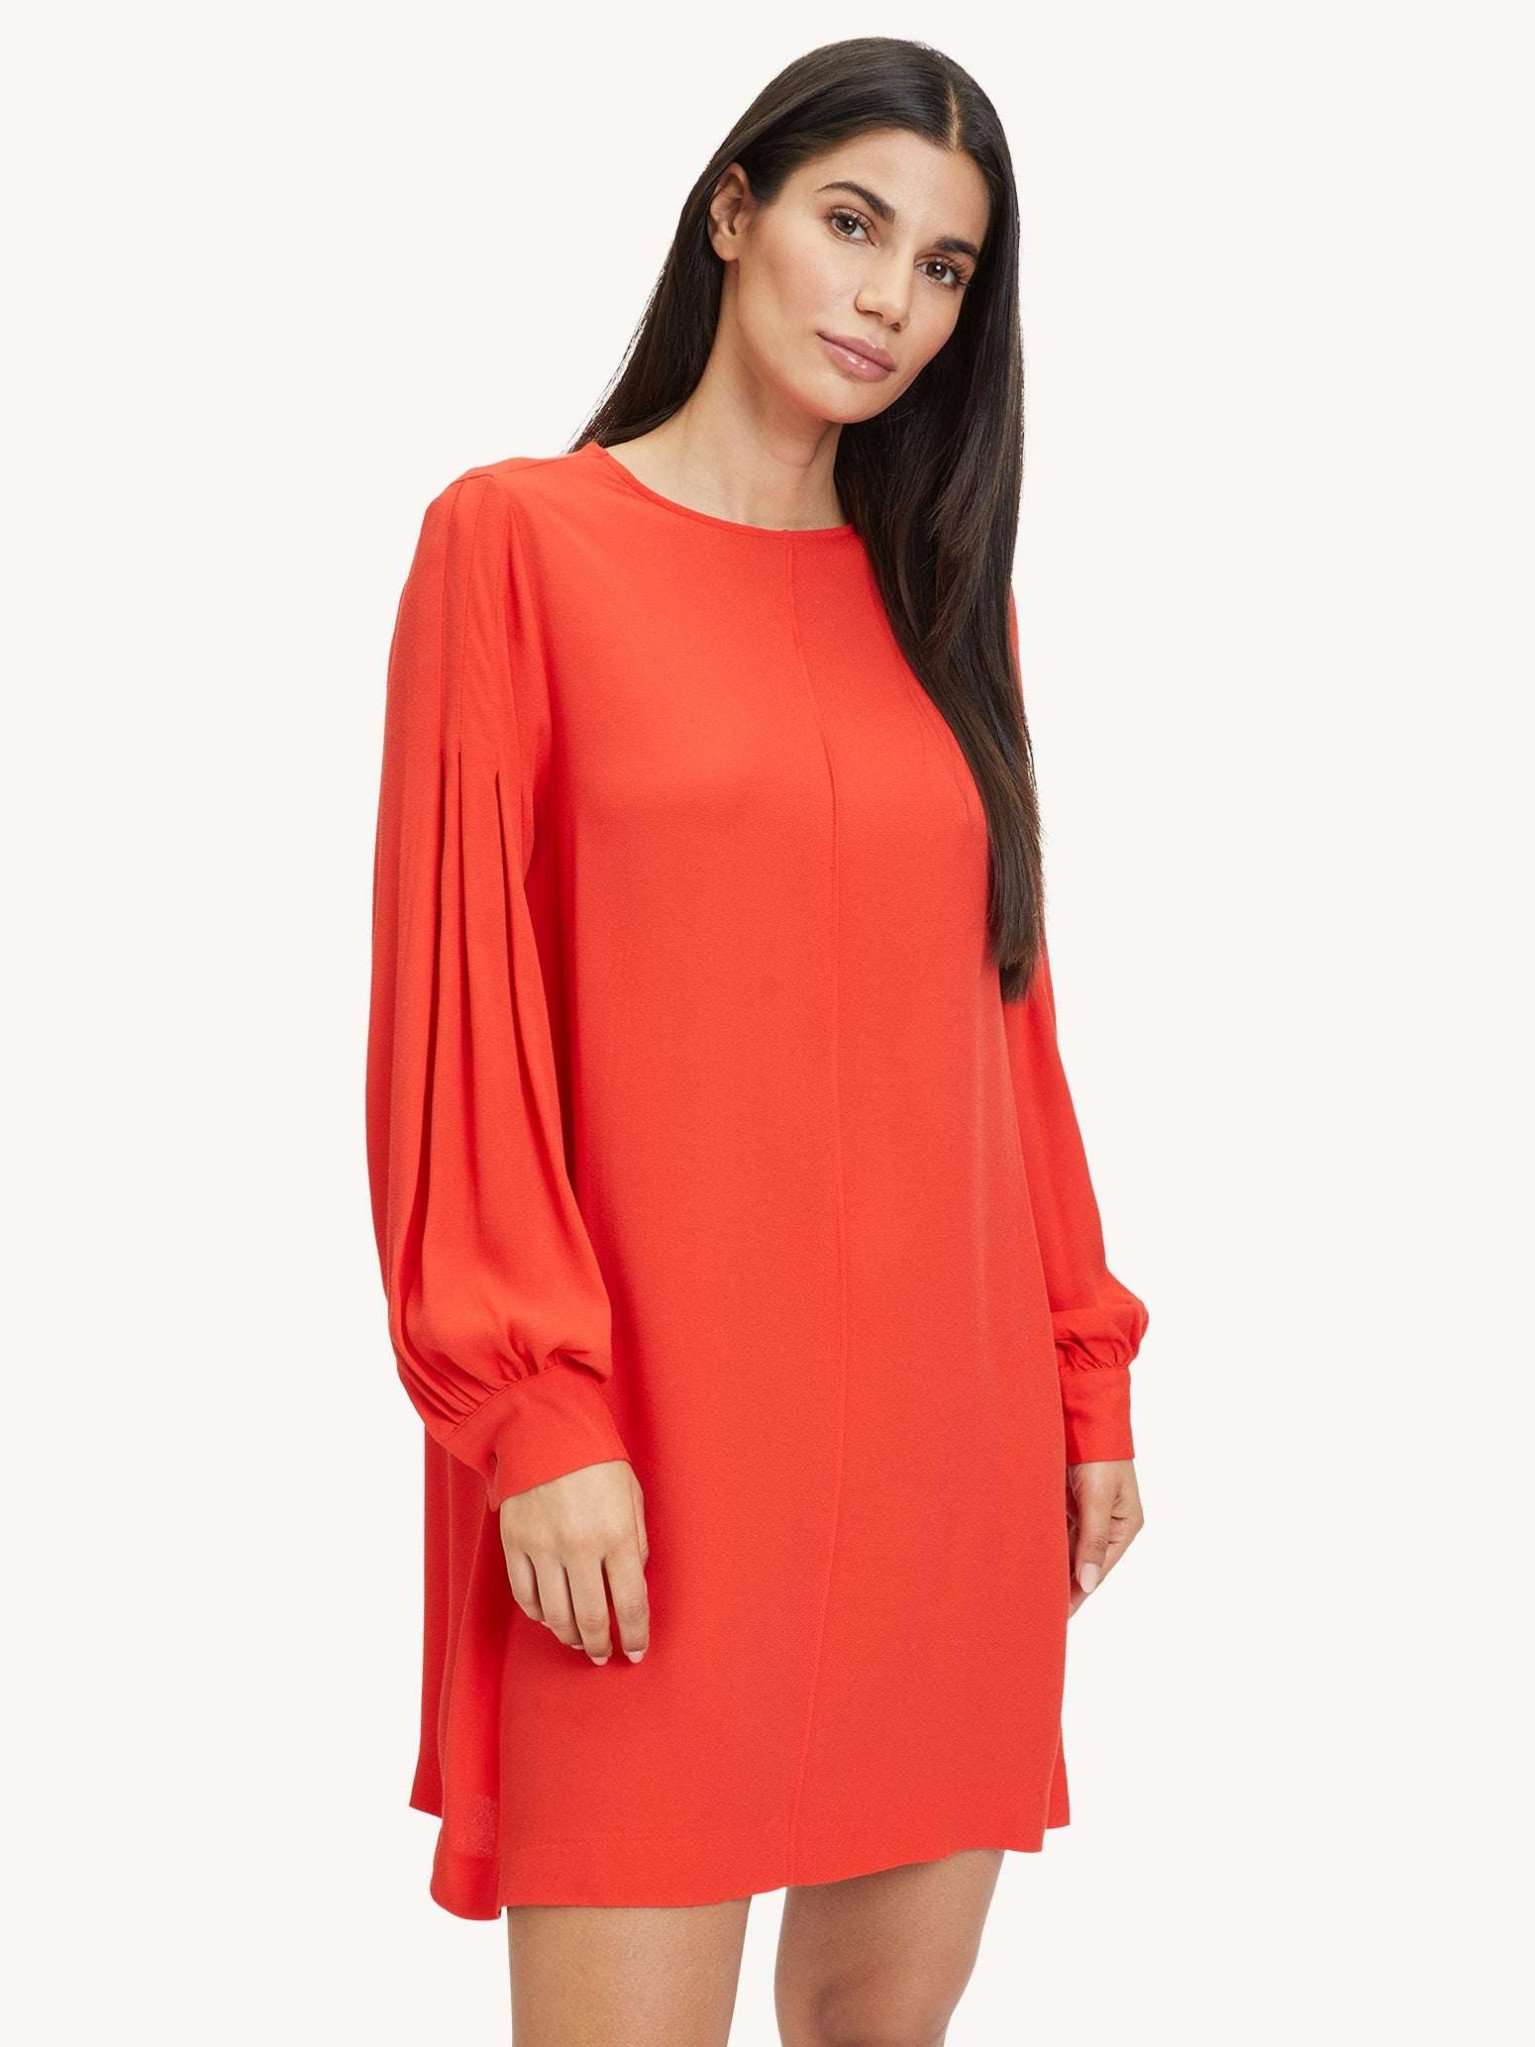 Bedenica A- Line Dress in Fiery Red Kleider Tamaris   